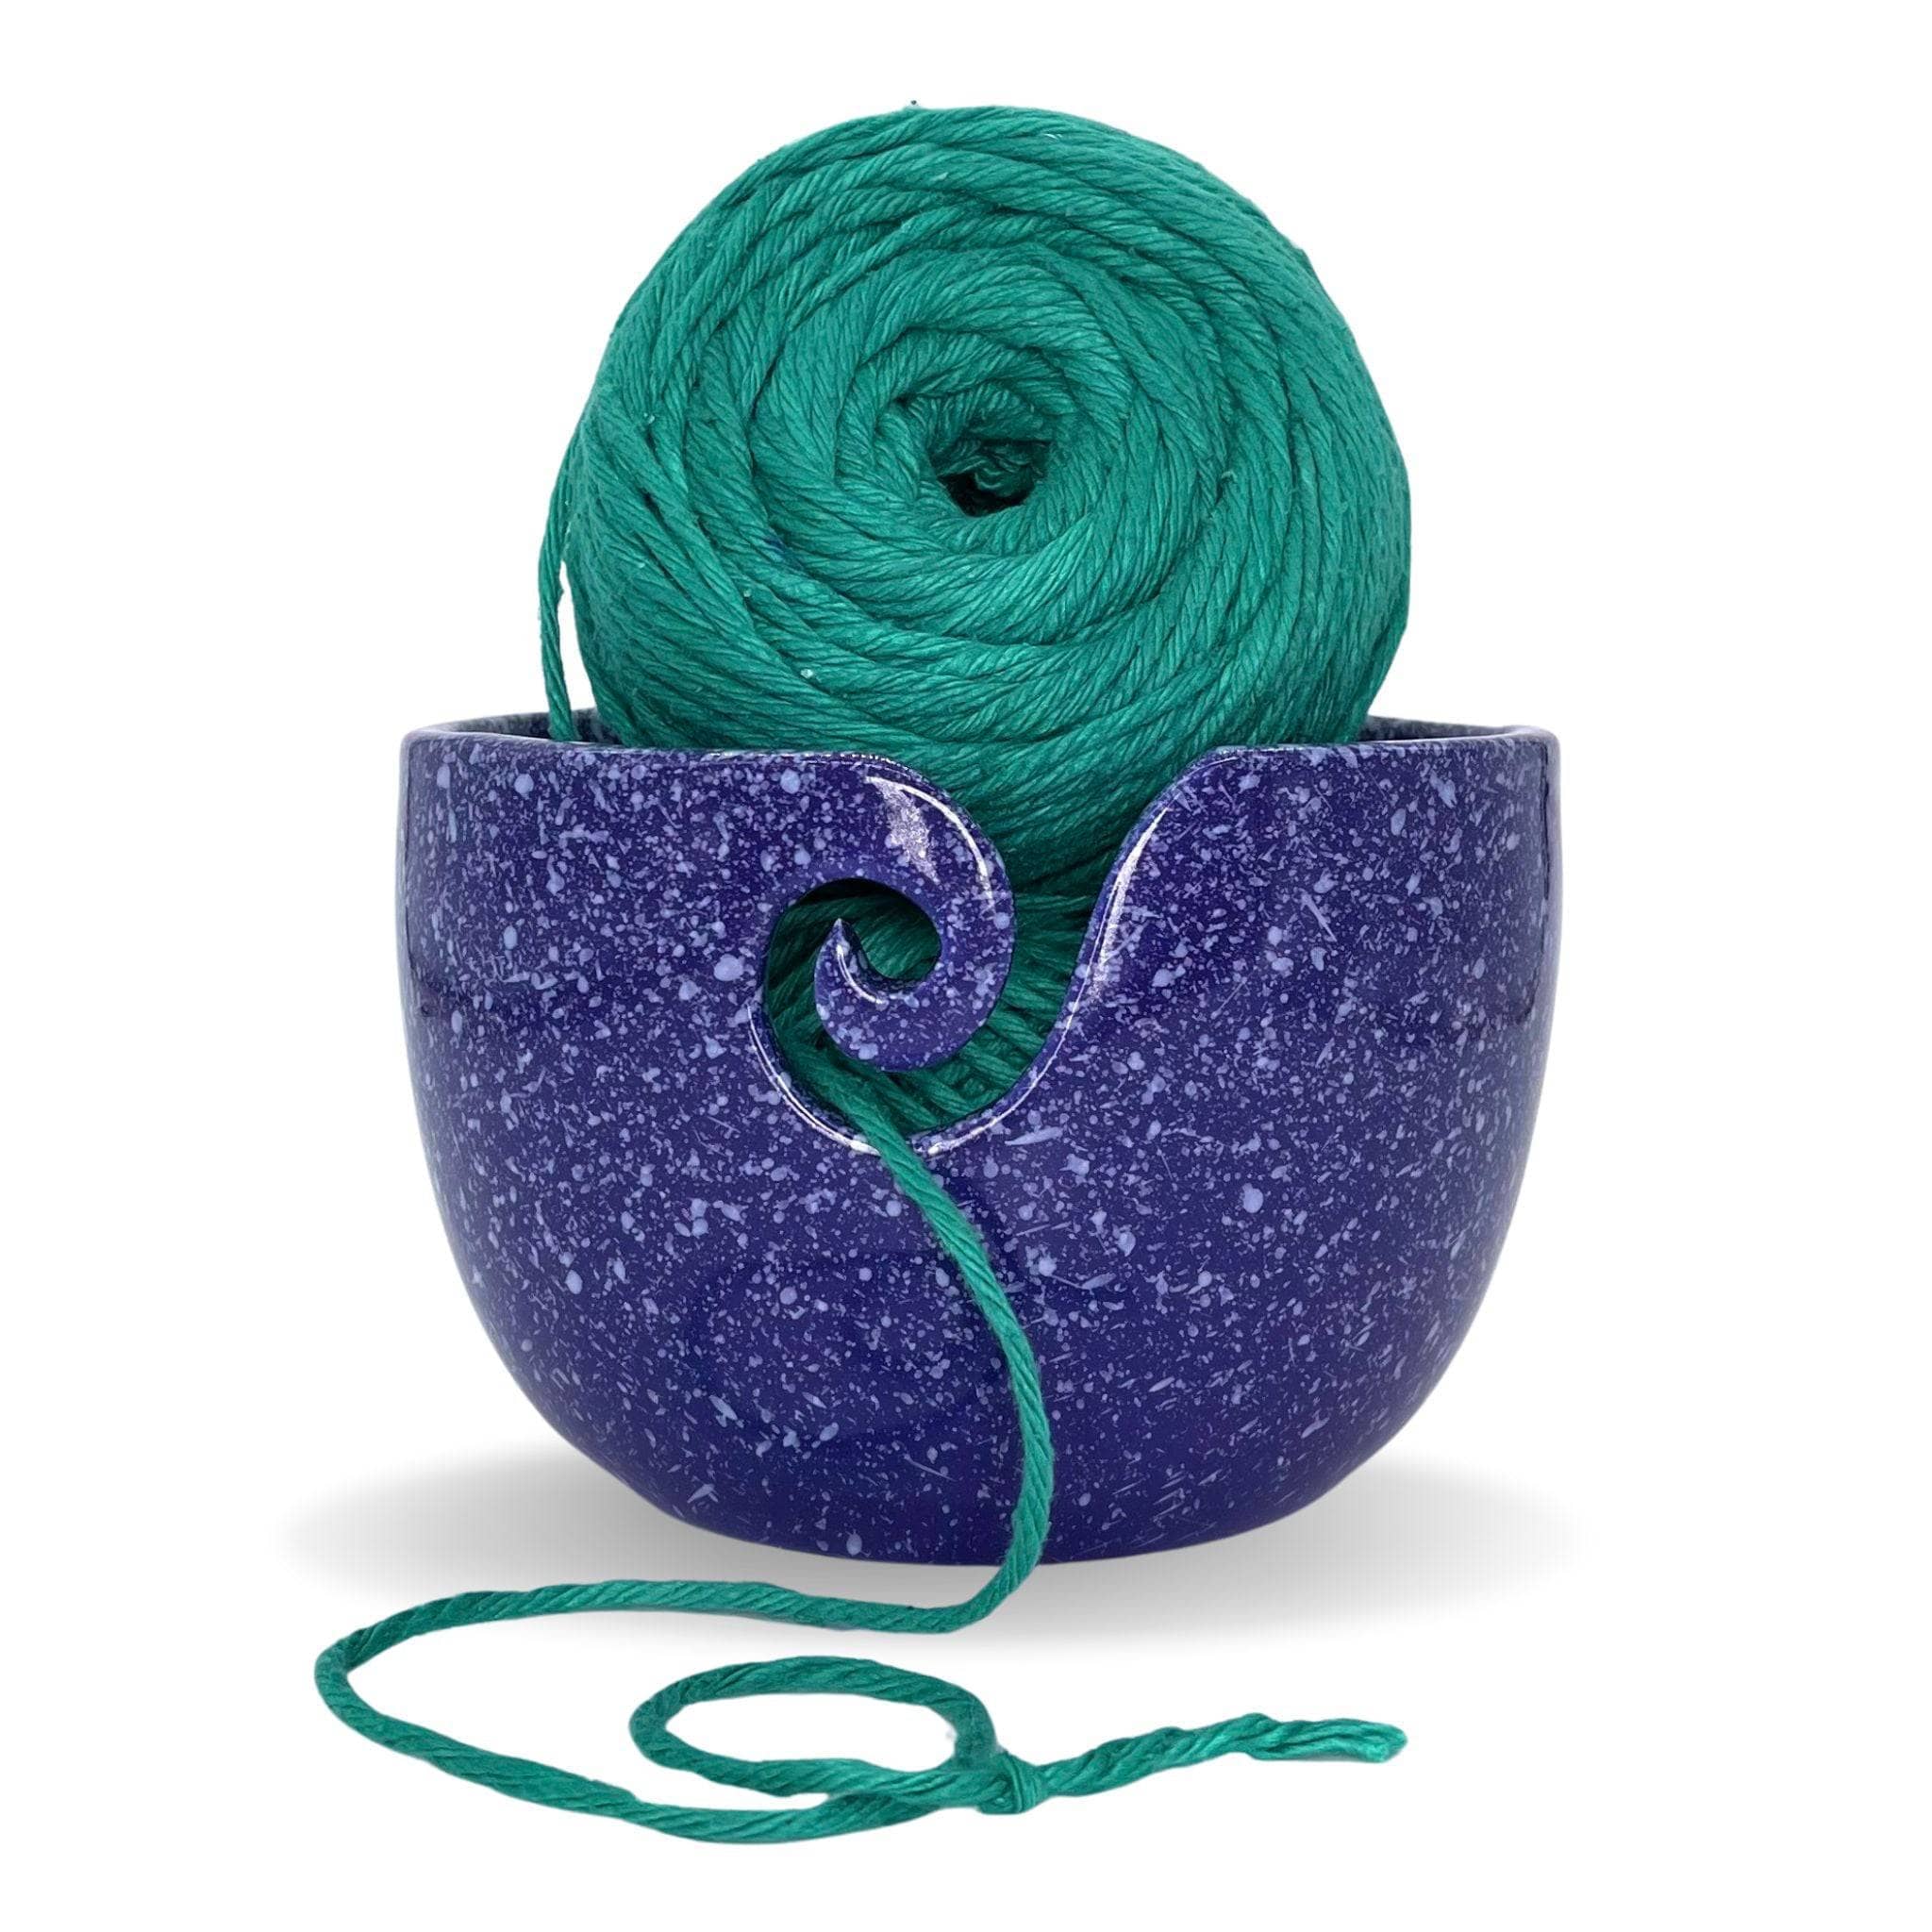 Yarn bowl Knitting bowls Crochet Ceramic bowl bright White